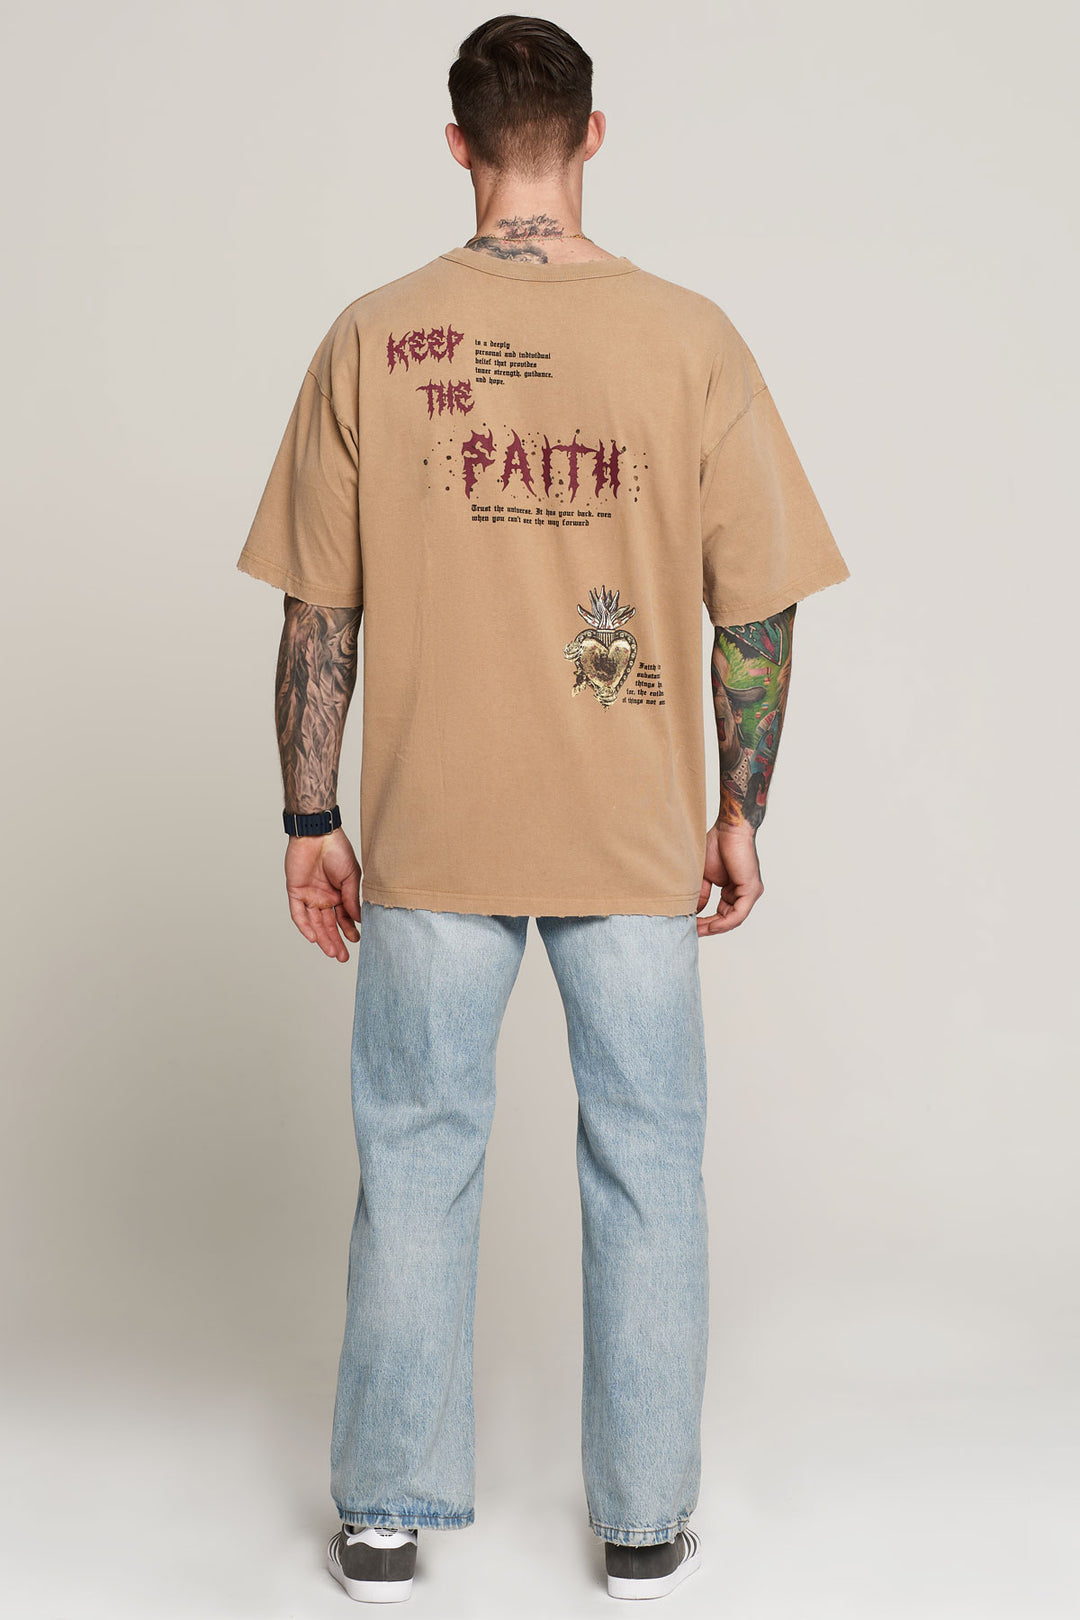 Trust The Universe Have Faith T-Shirt